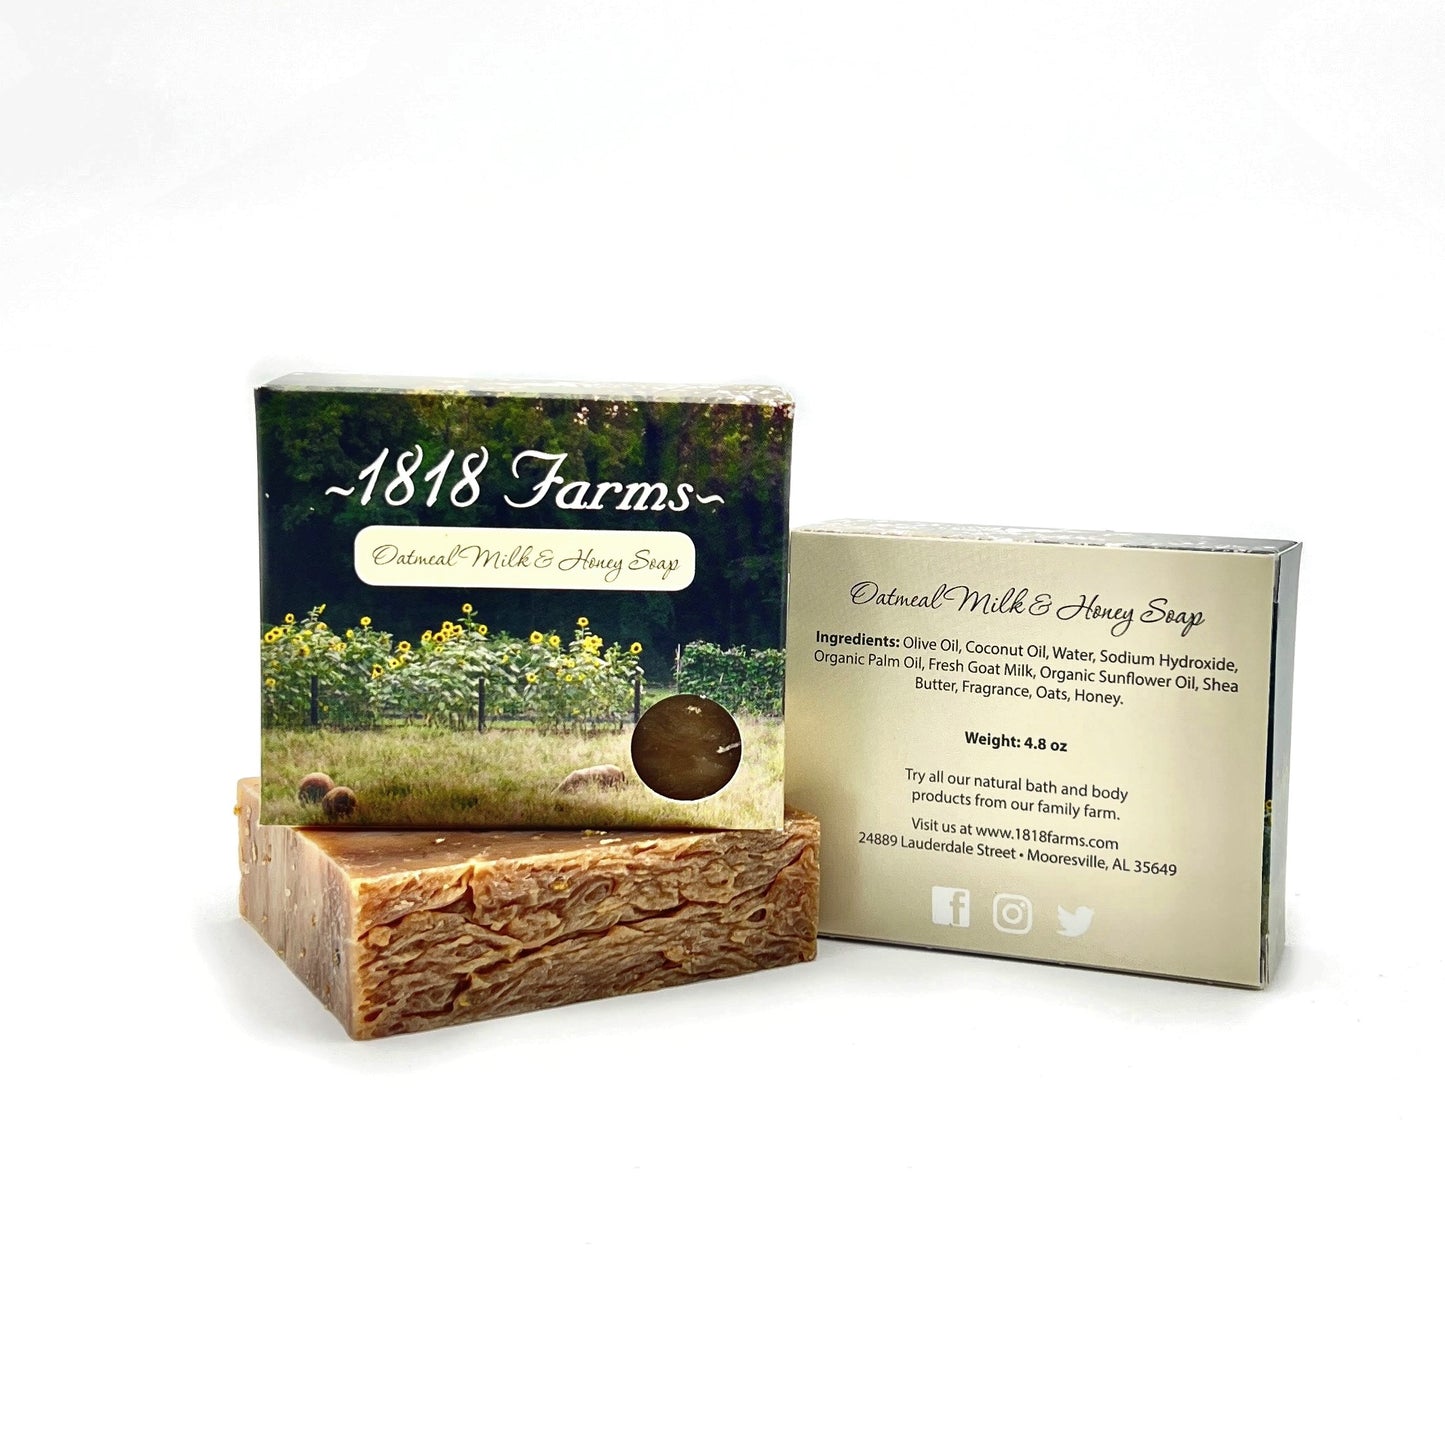 1818 Farms "Favorites" Gift Box Gift Basket 1818 Farms   